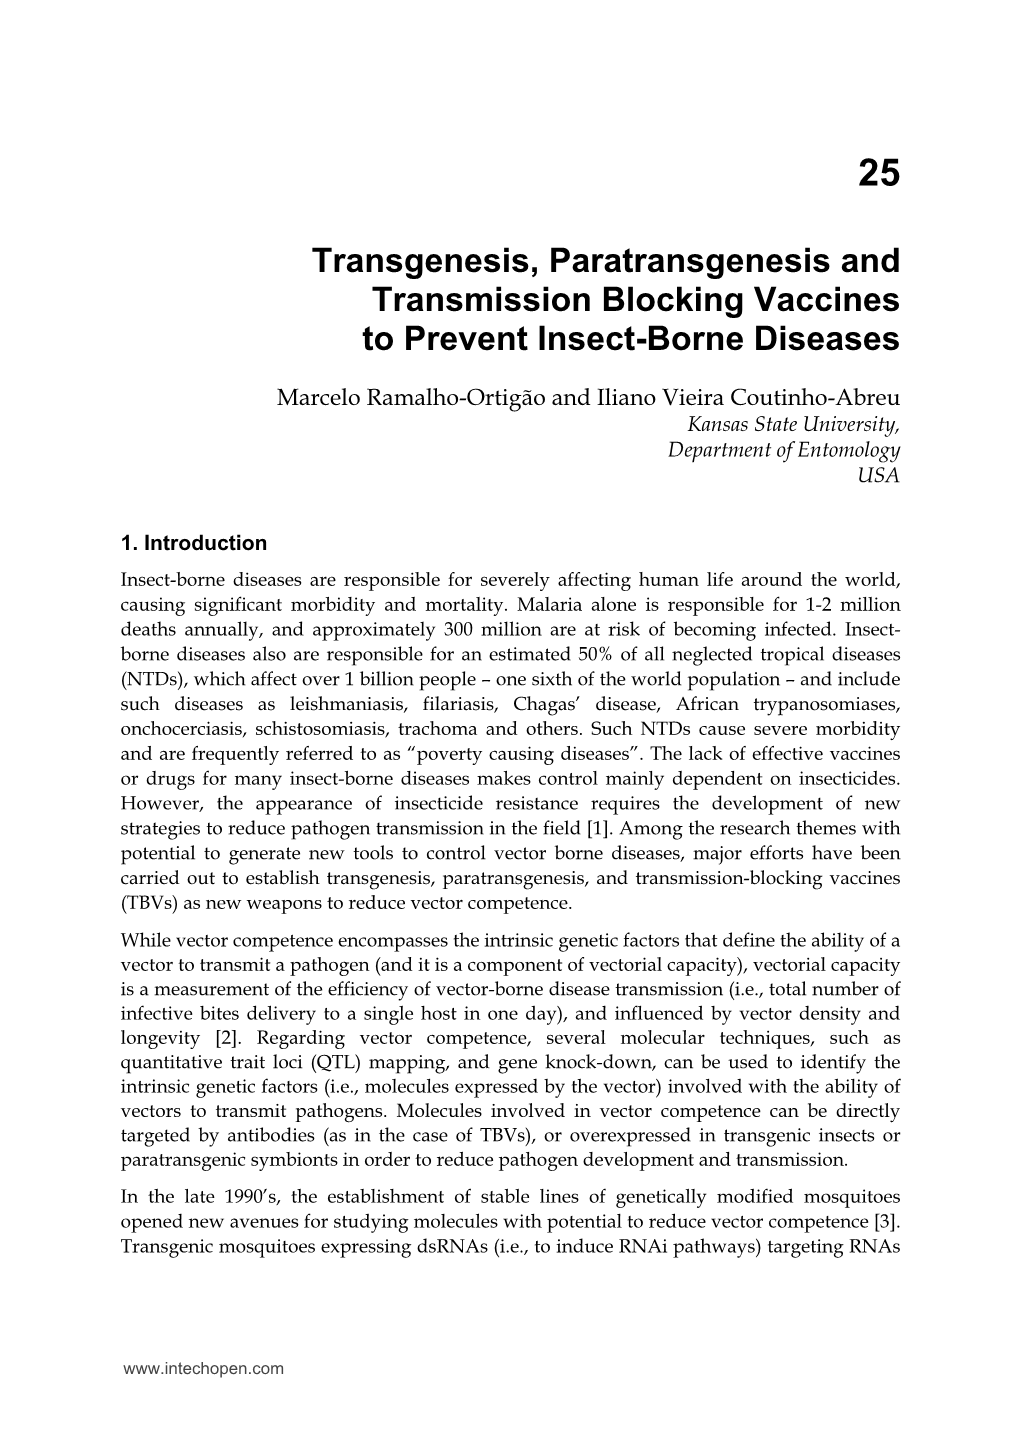 Transgenesis, Paratransgenesis and Transmission Blocking Vaccines to Prevent Insect-Borne Diseases